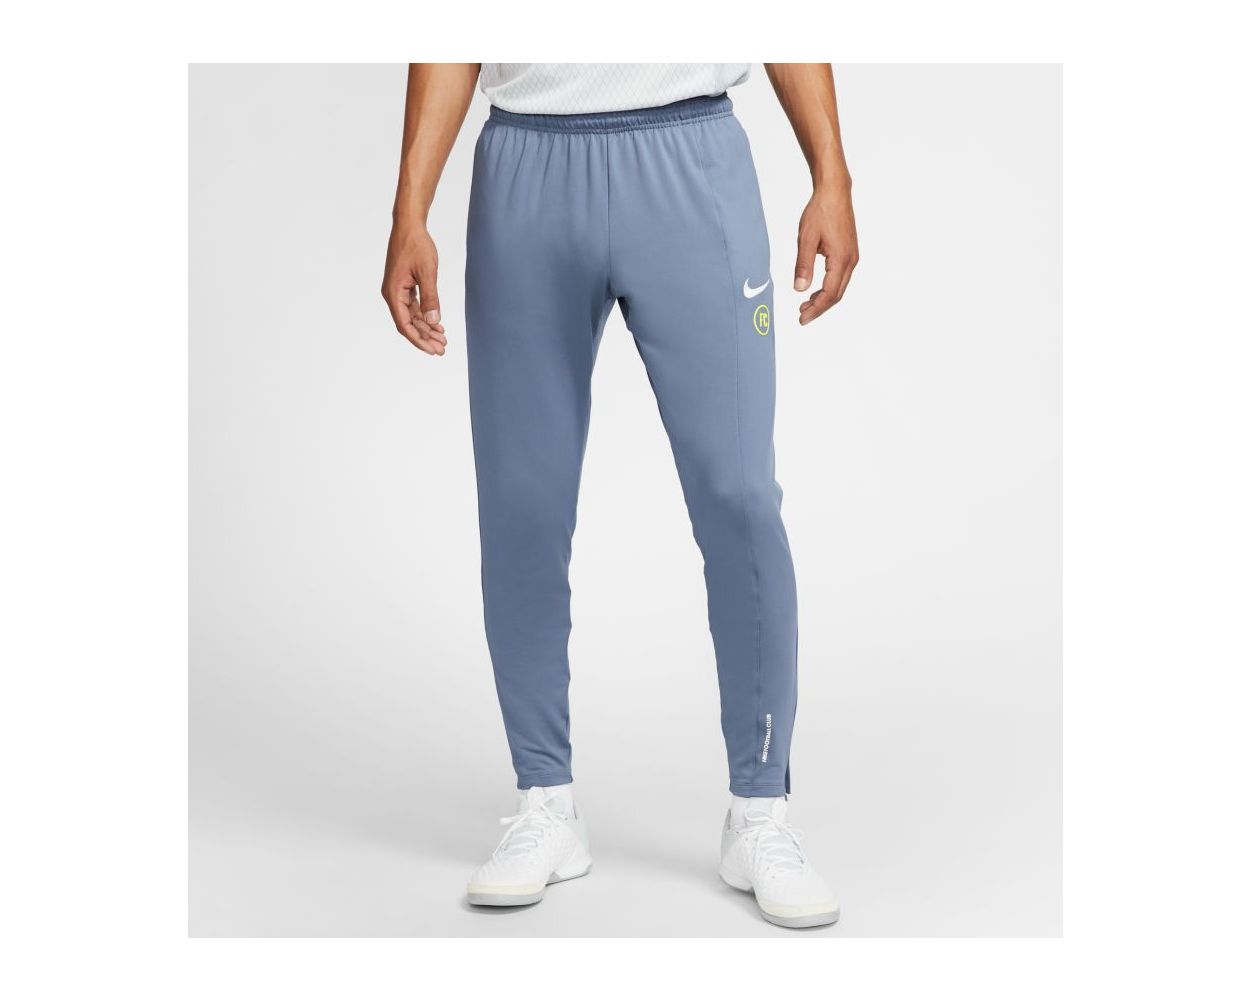 Nike F.C. Training Pants Mens - Obsidian Mist/Diffused Blue